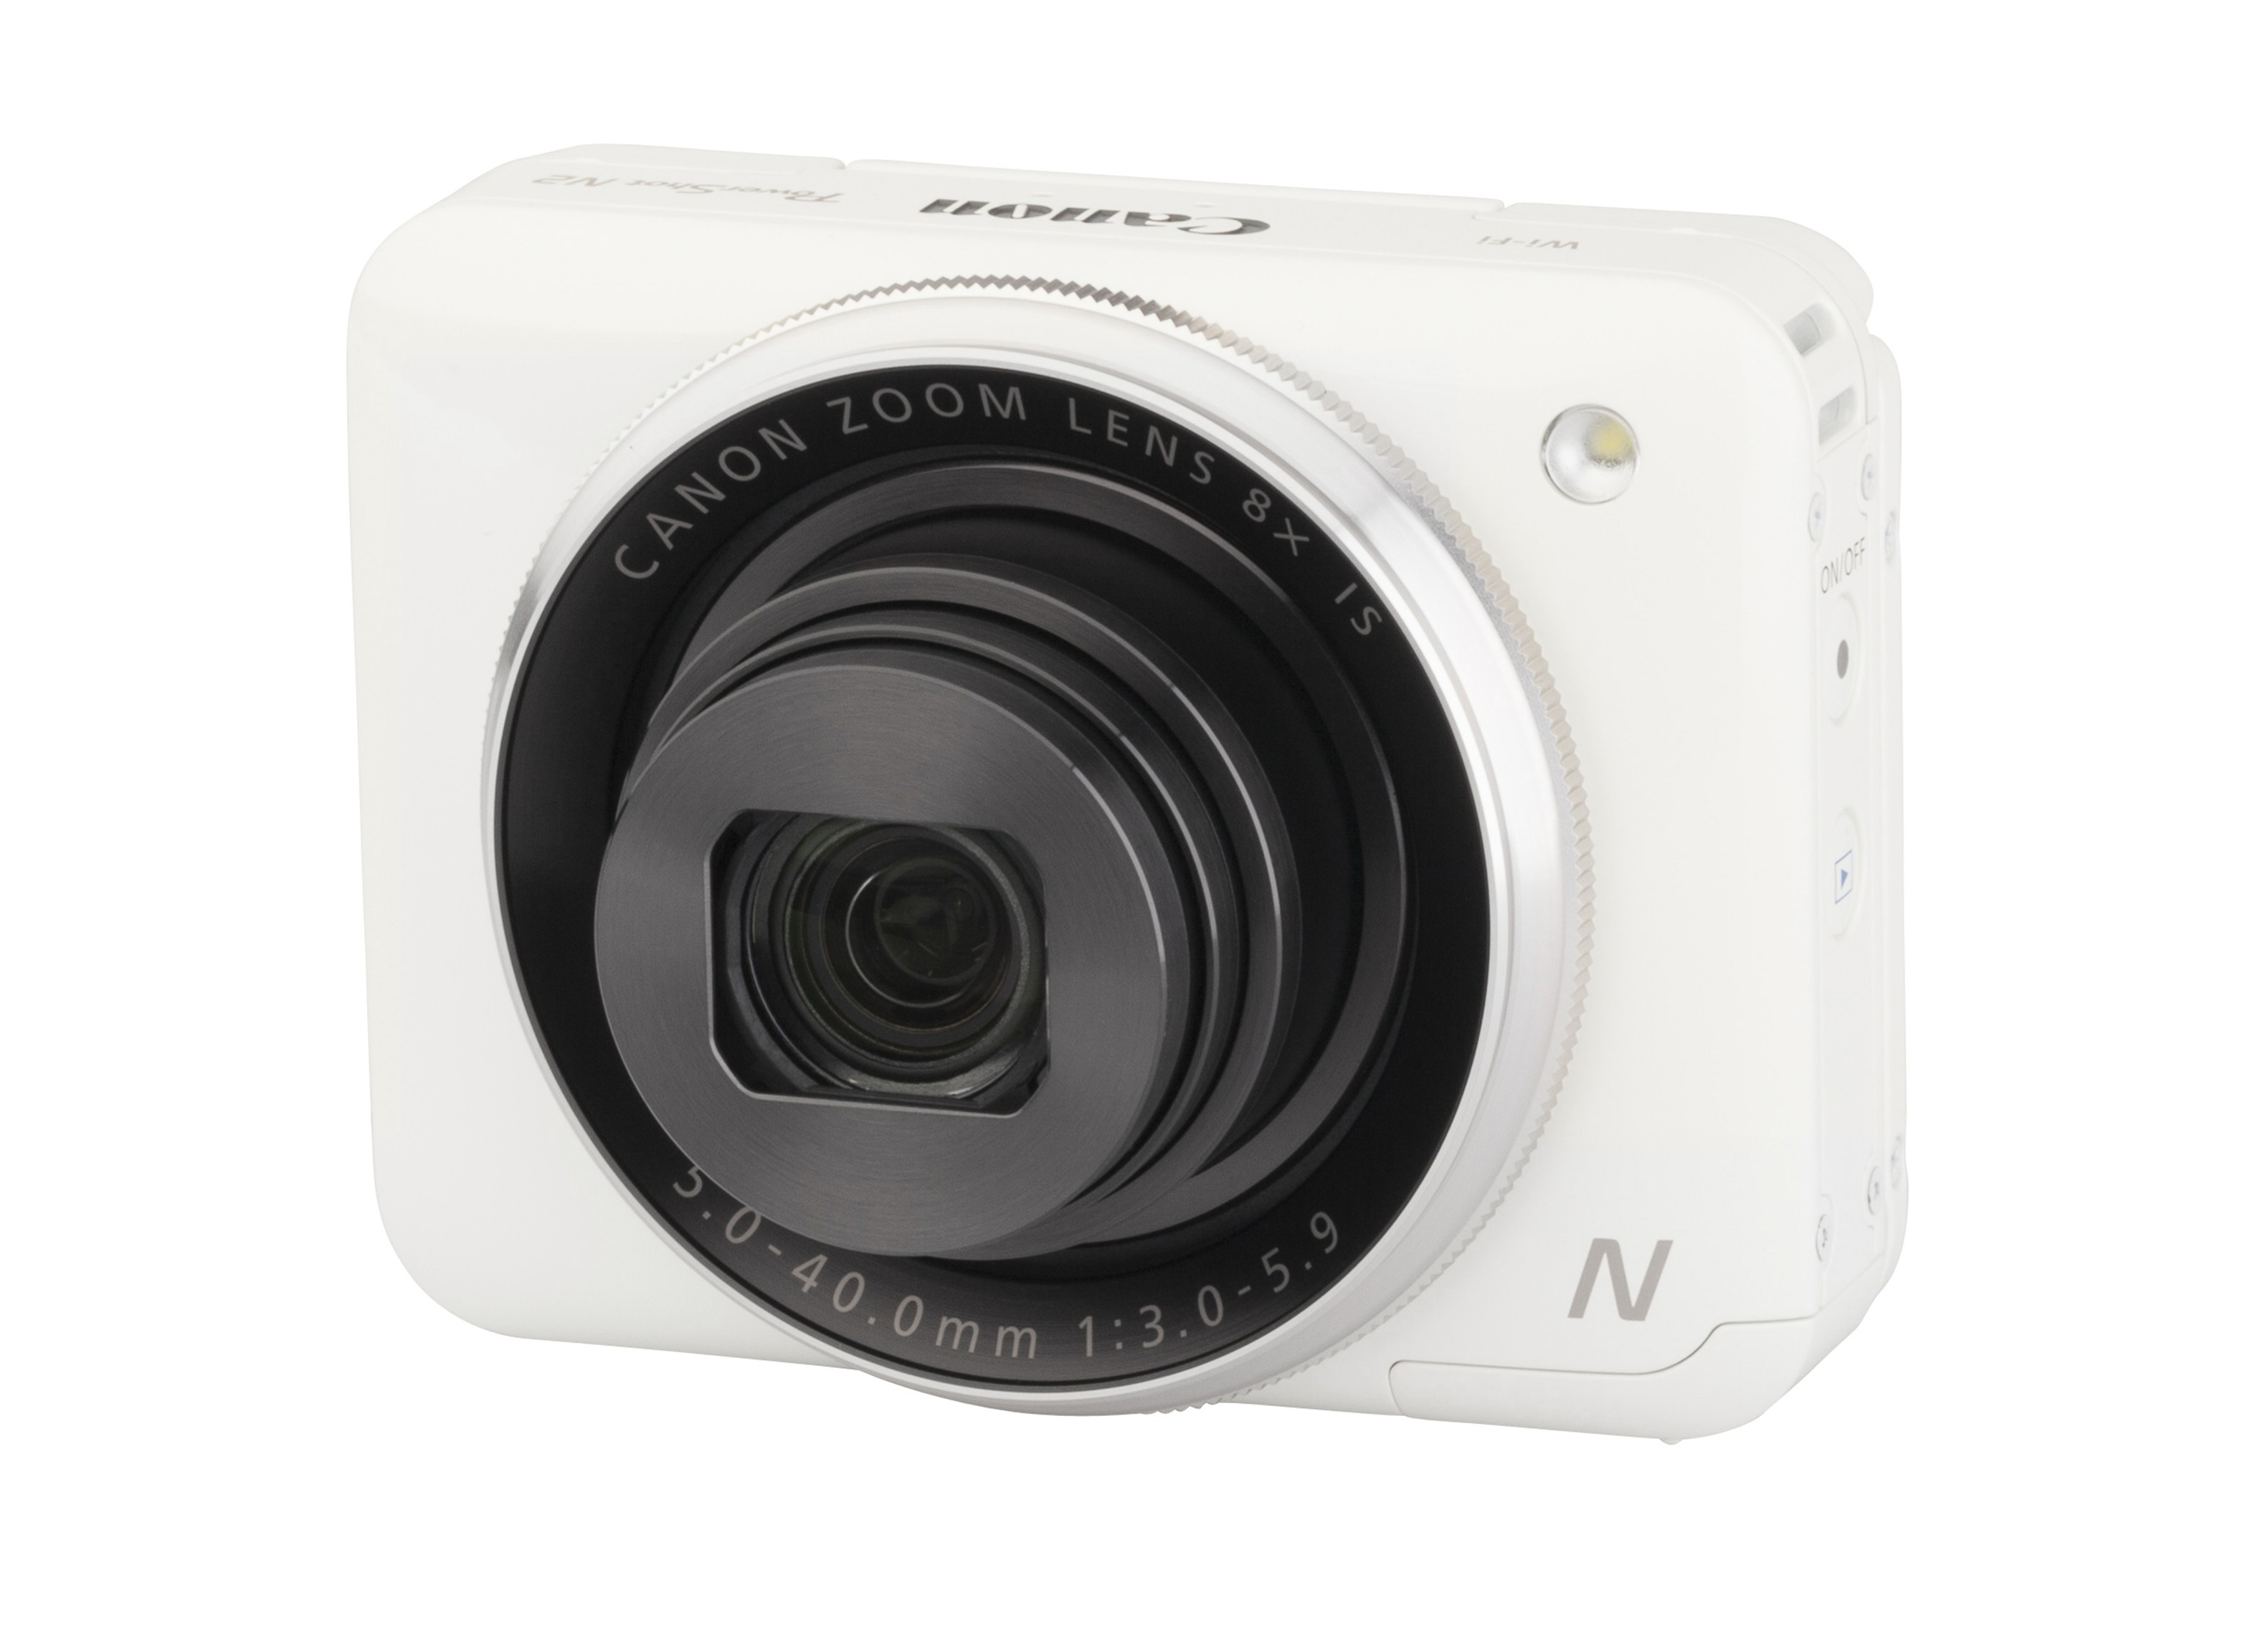 Canon PowerShot N2 Camera Review - Consumer Reports